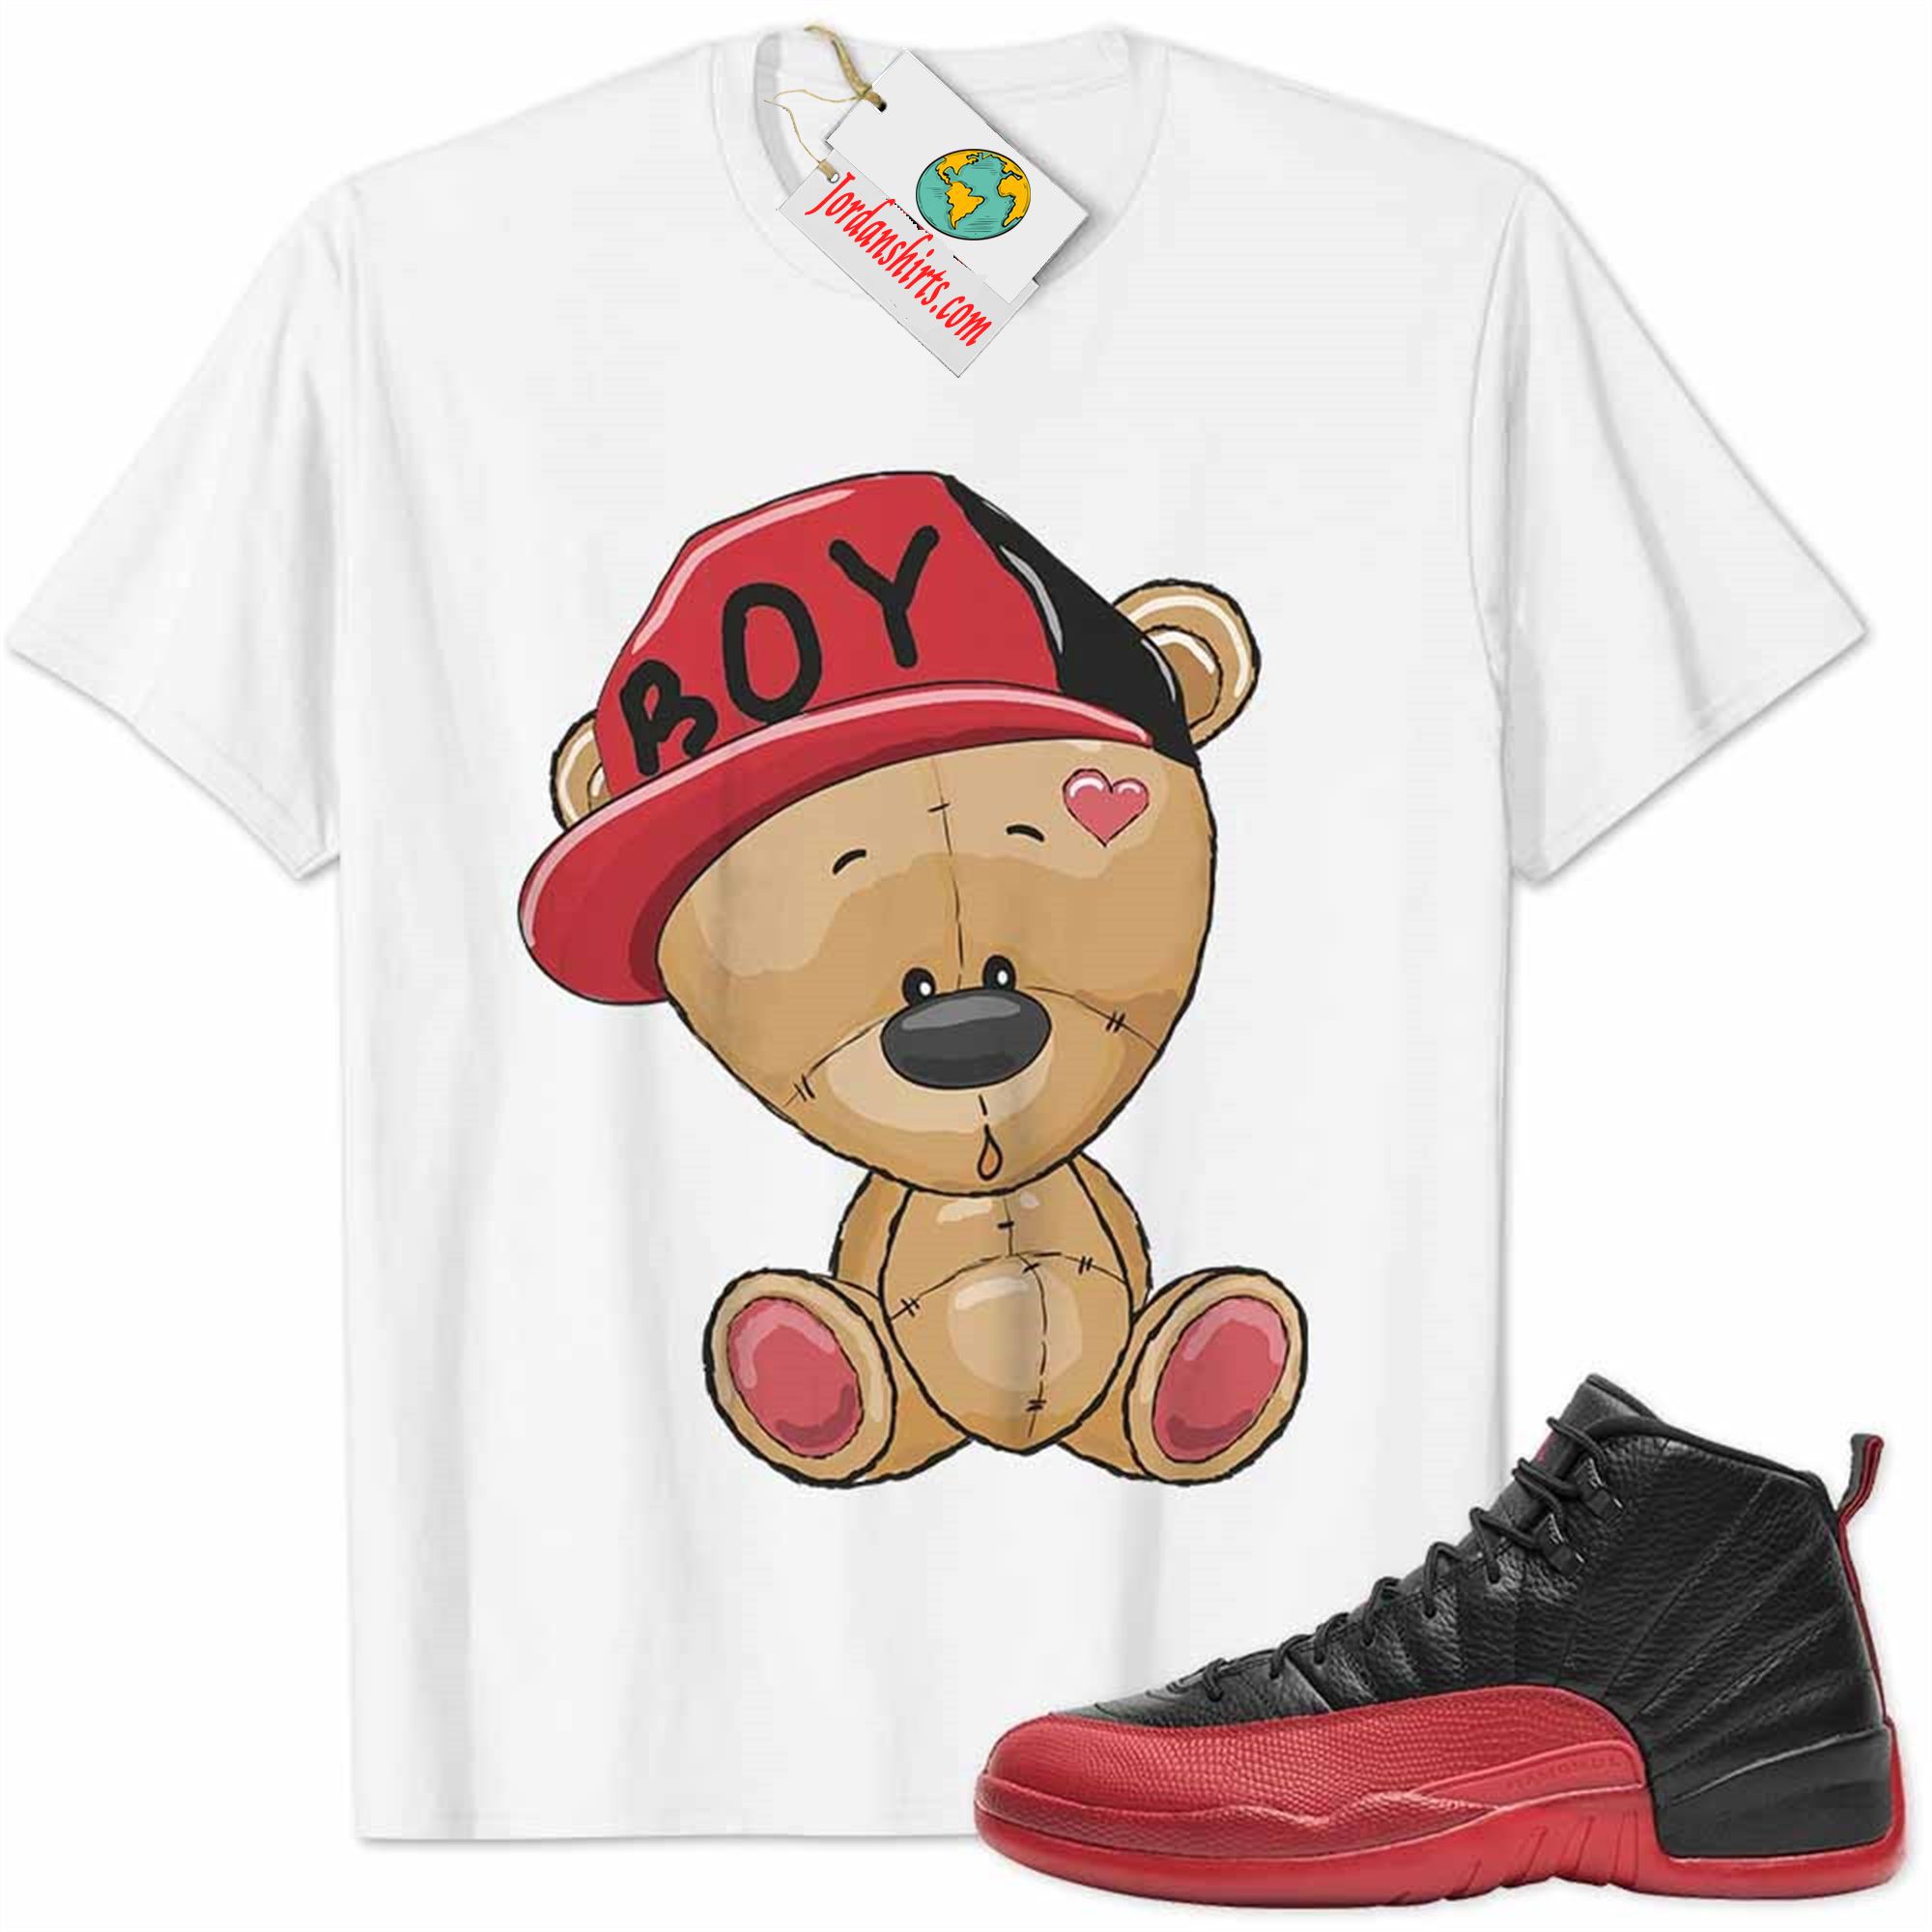 Jordan 12 Shirt, Jordan 12 Flu Game Shirt Cute Baby Teddy Bear White Size Up To 5xl